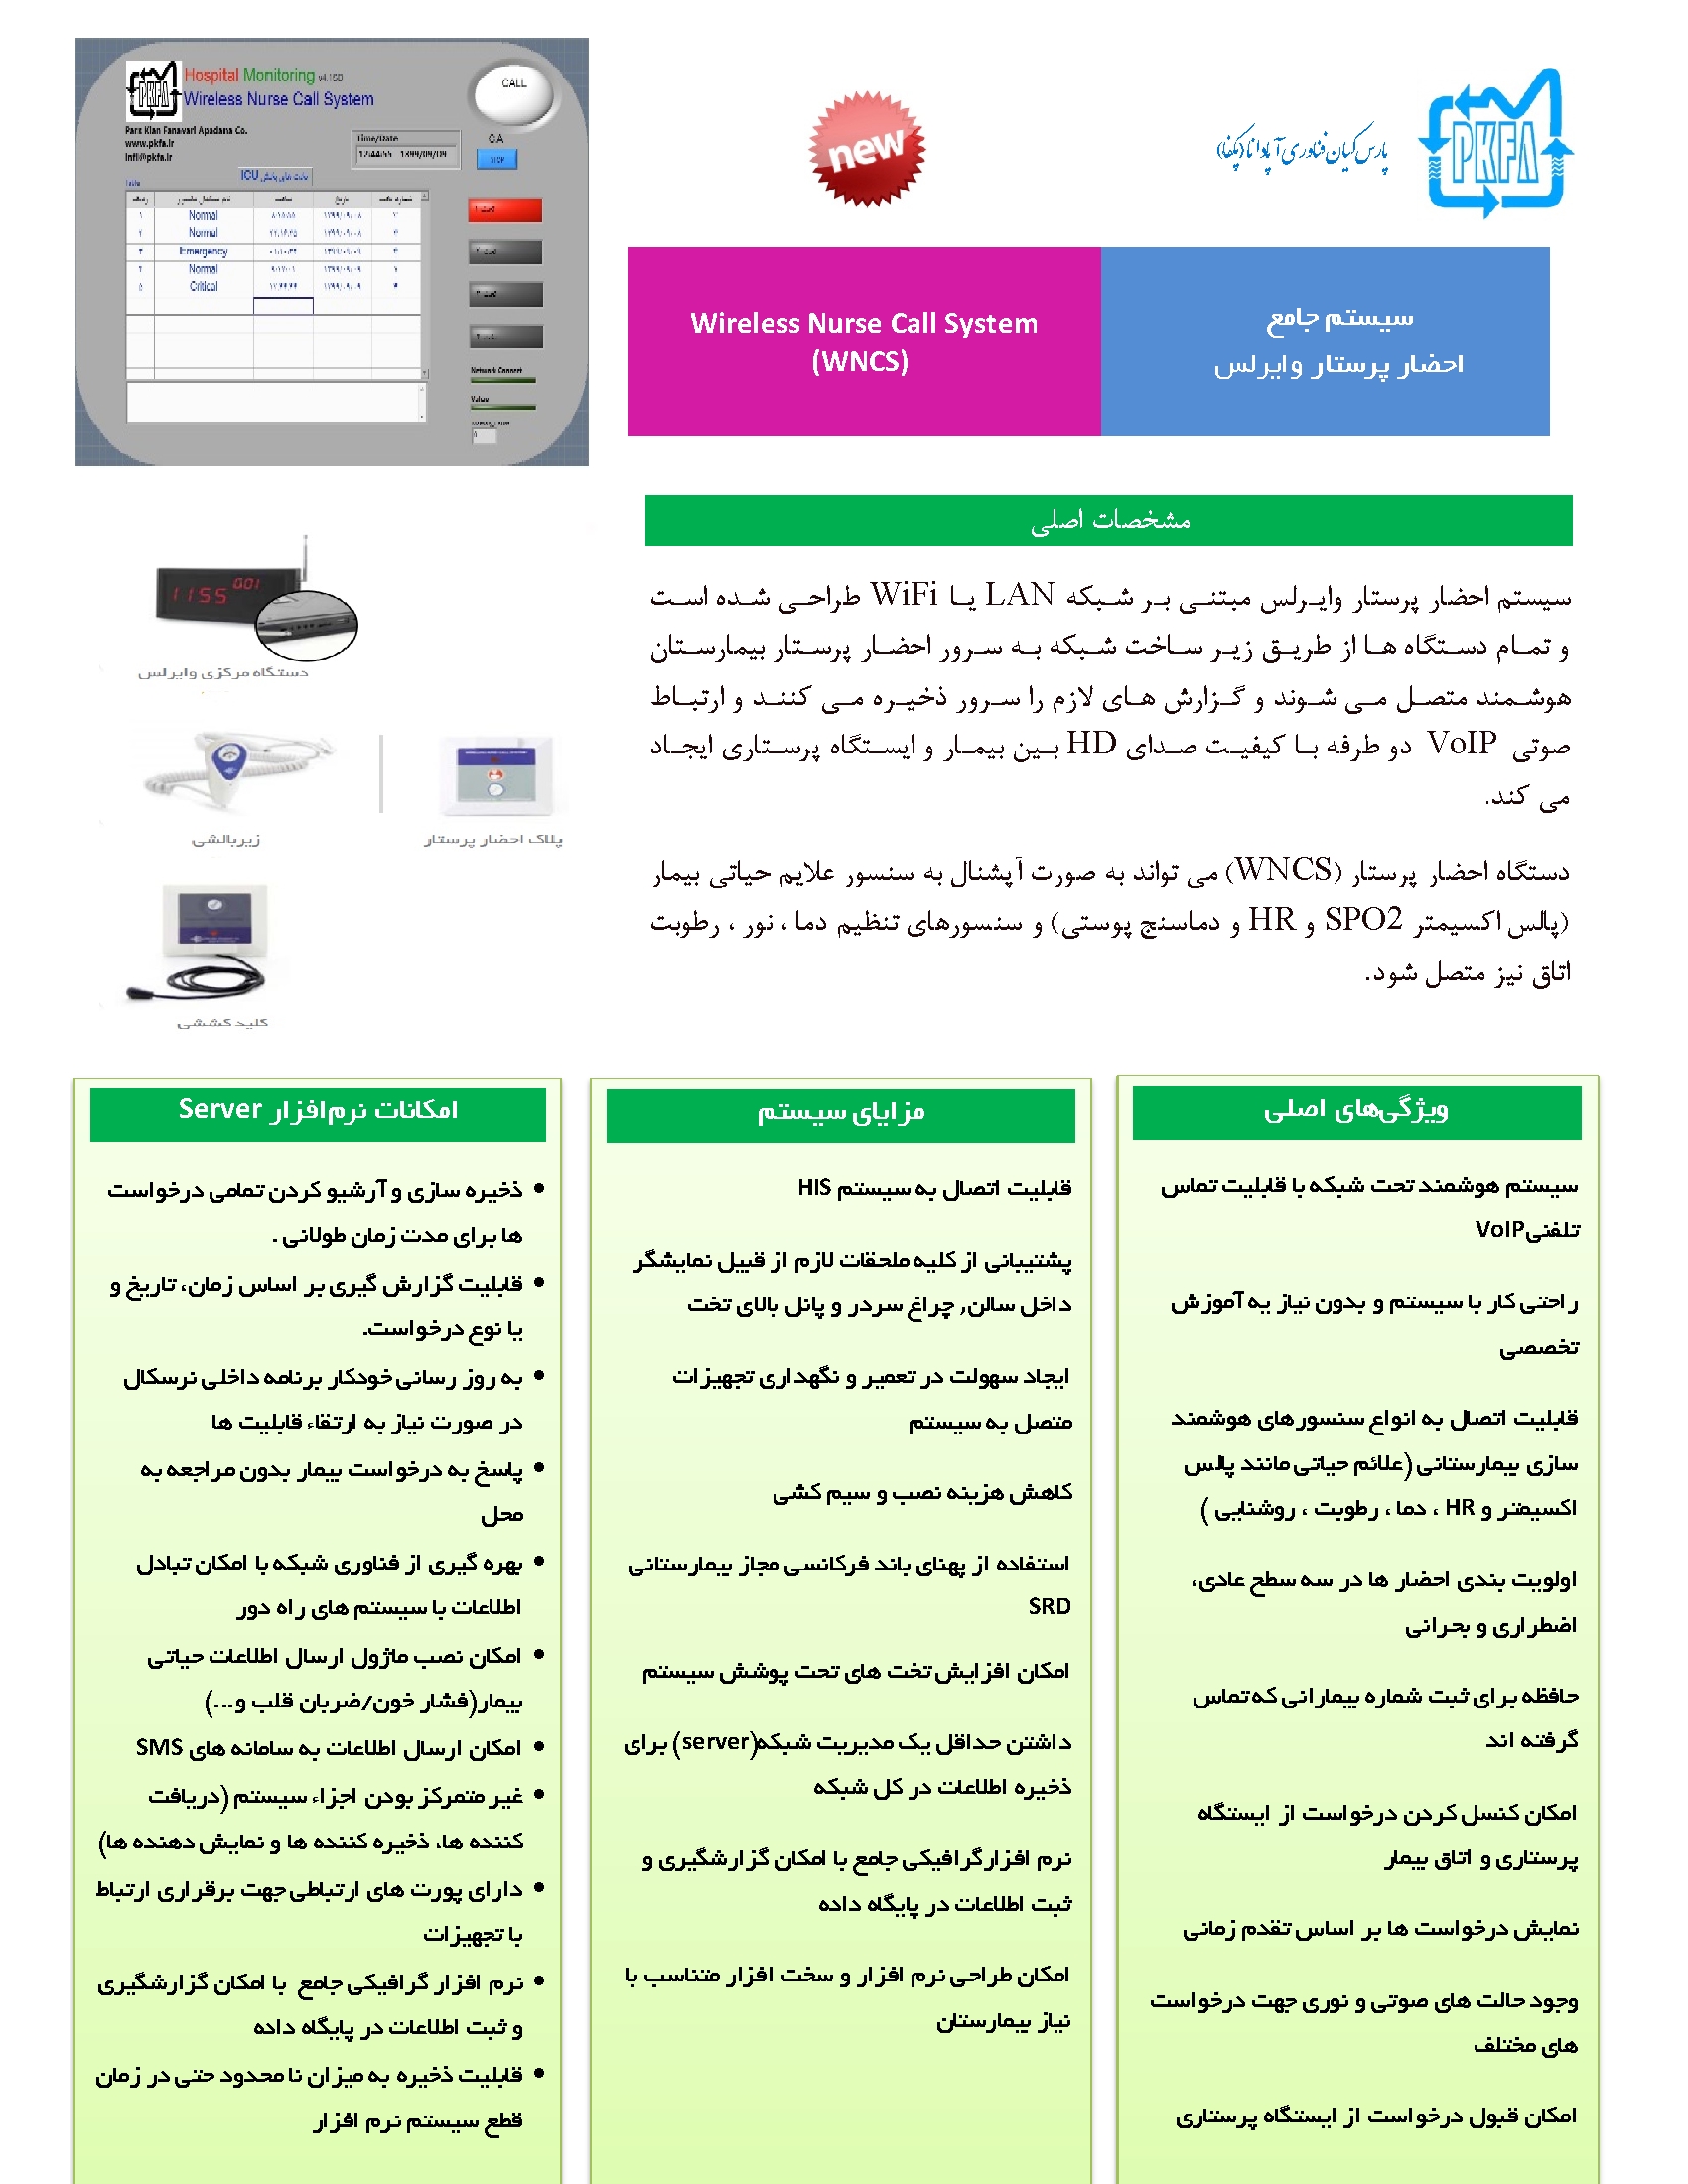 Microsoft Word - PKFA Catalog - NCMU - Rev 3 (1400-07)